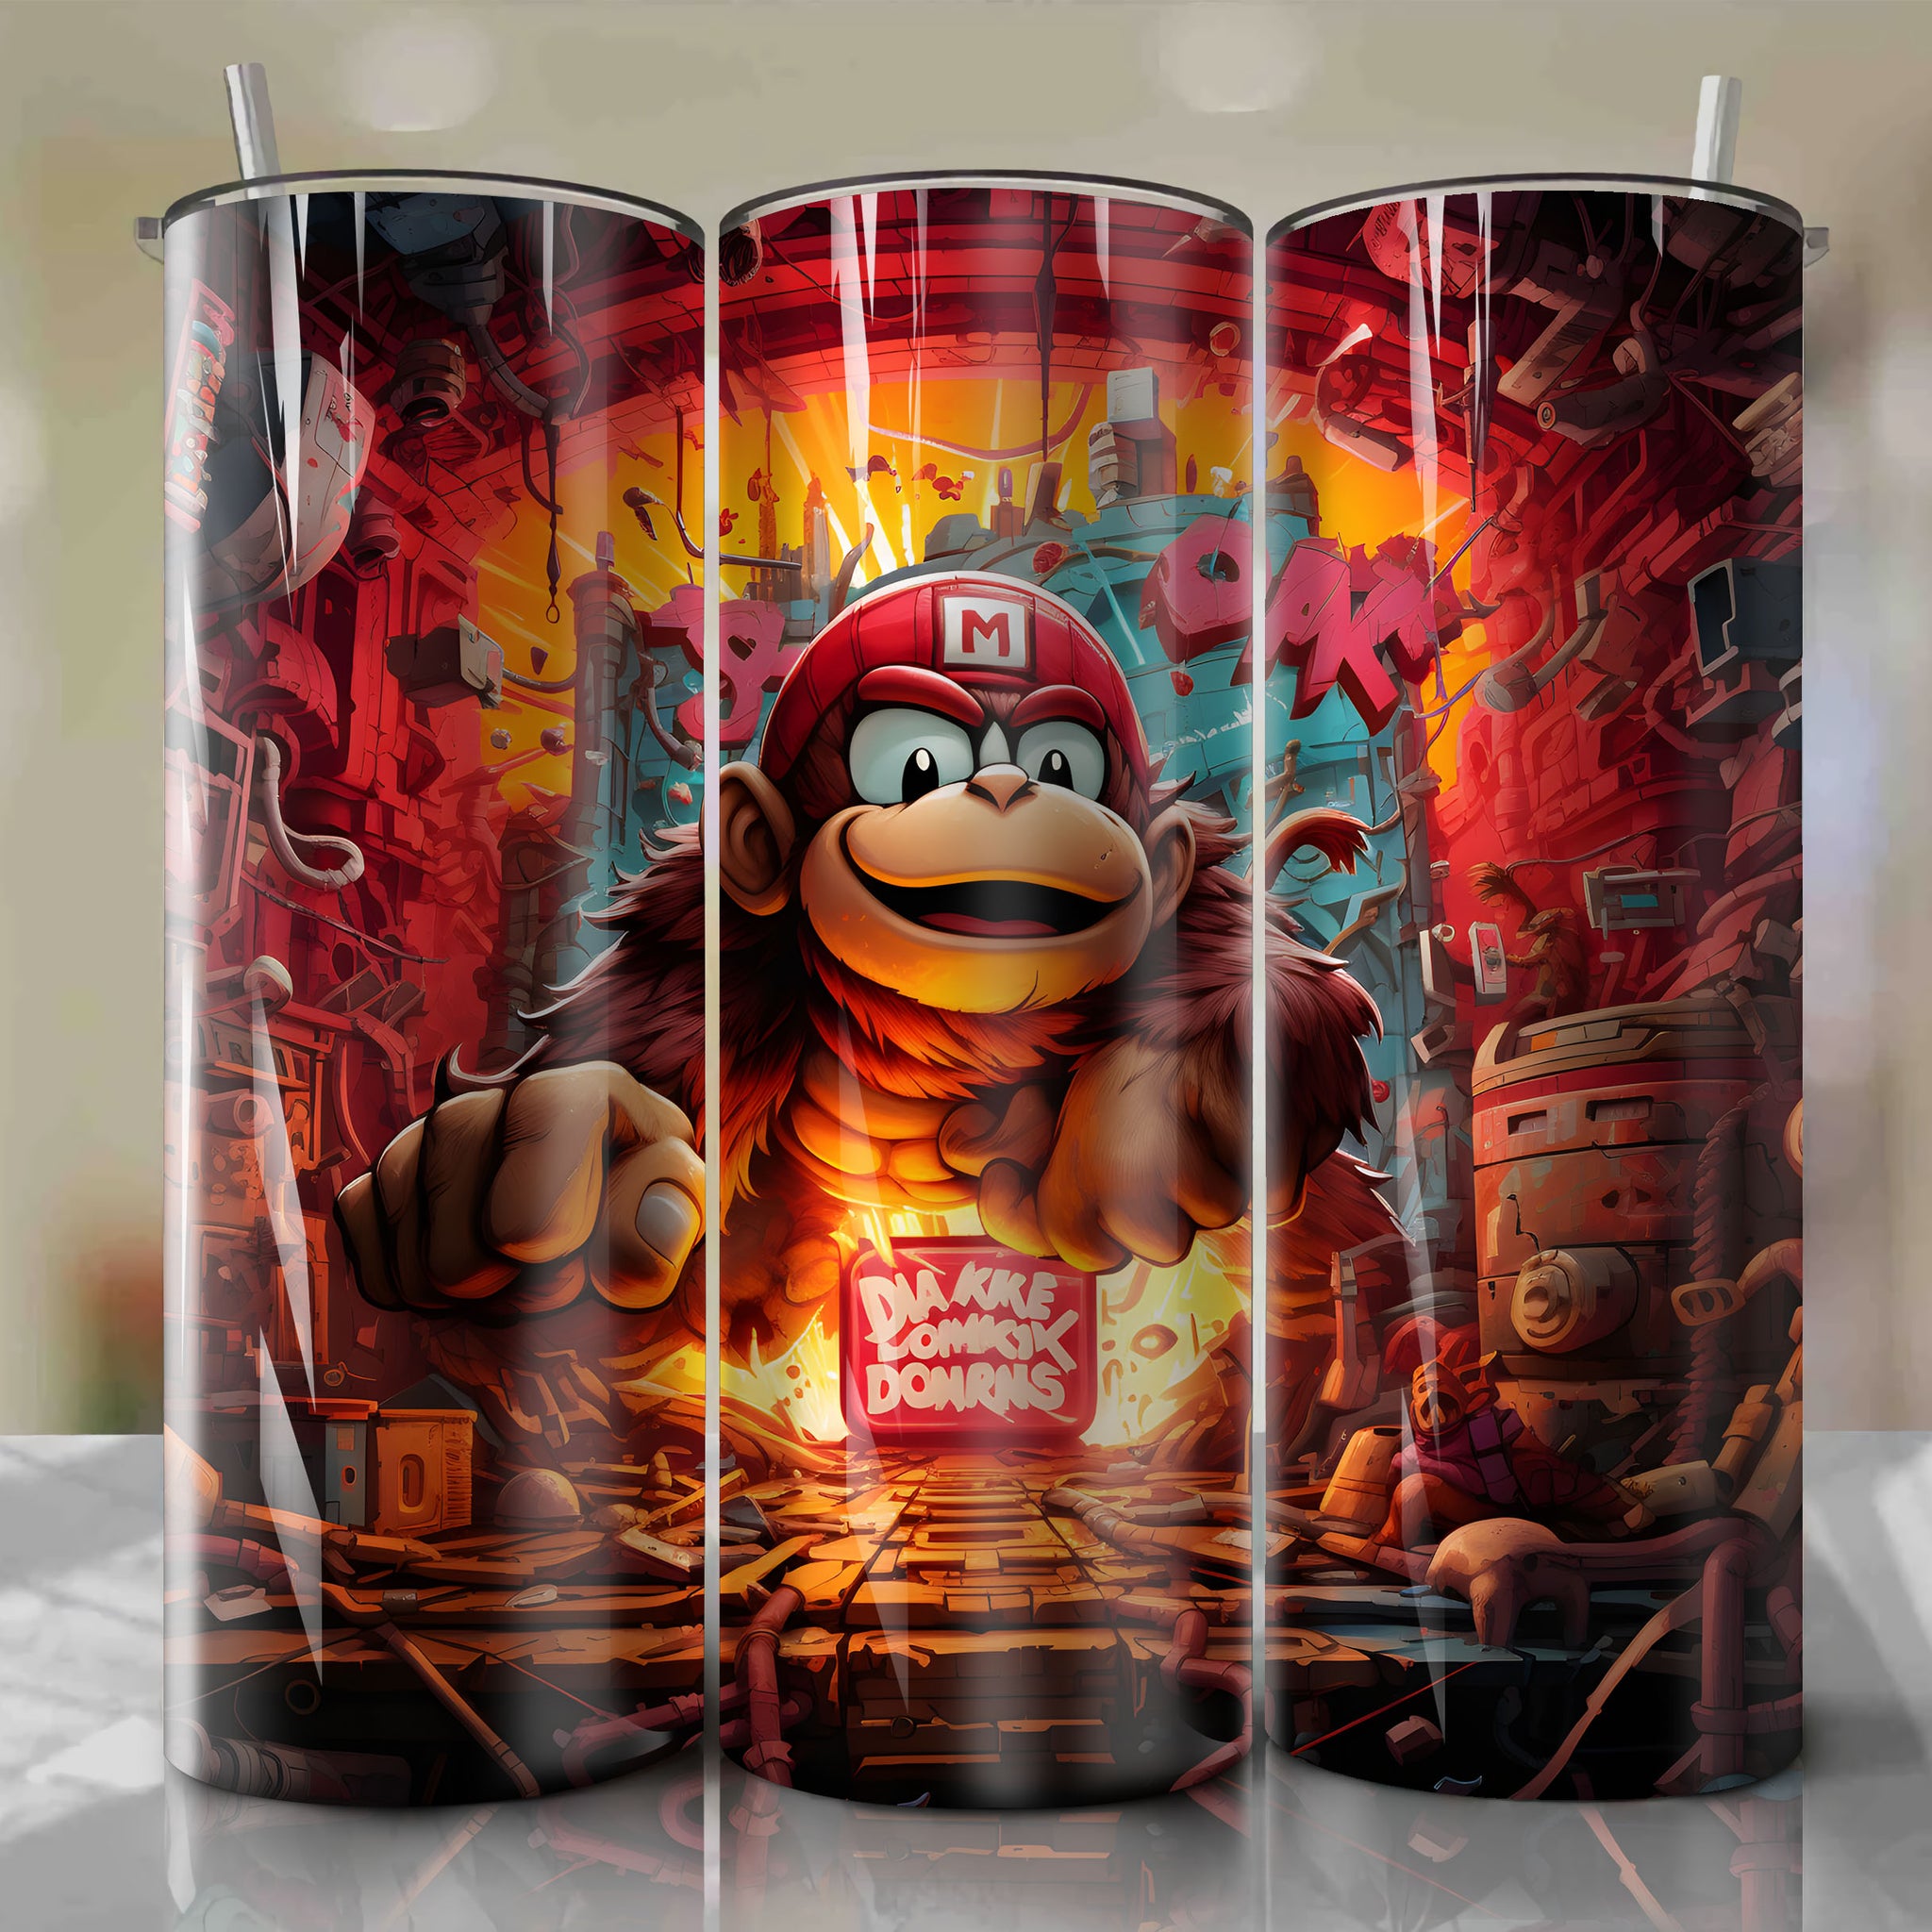 20 Oz Tumbler Wrap - Donkey Kong Inspired Cracked Plaster Cast Design
